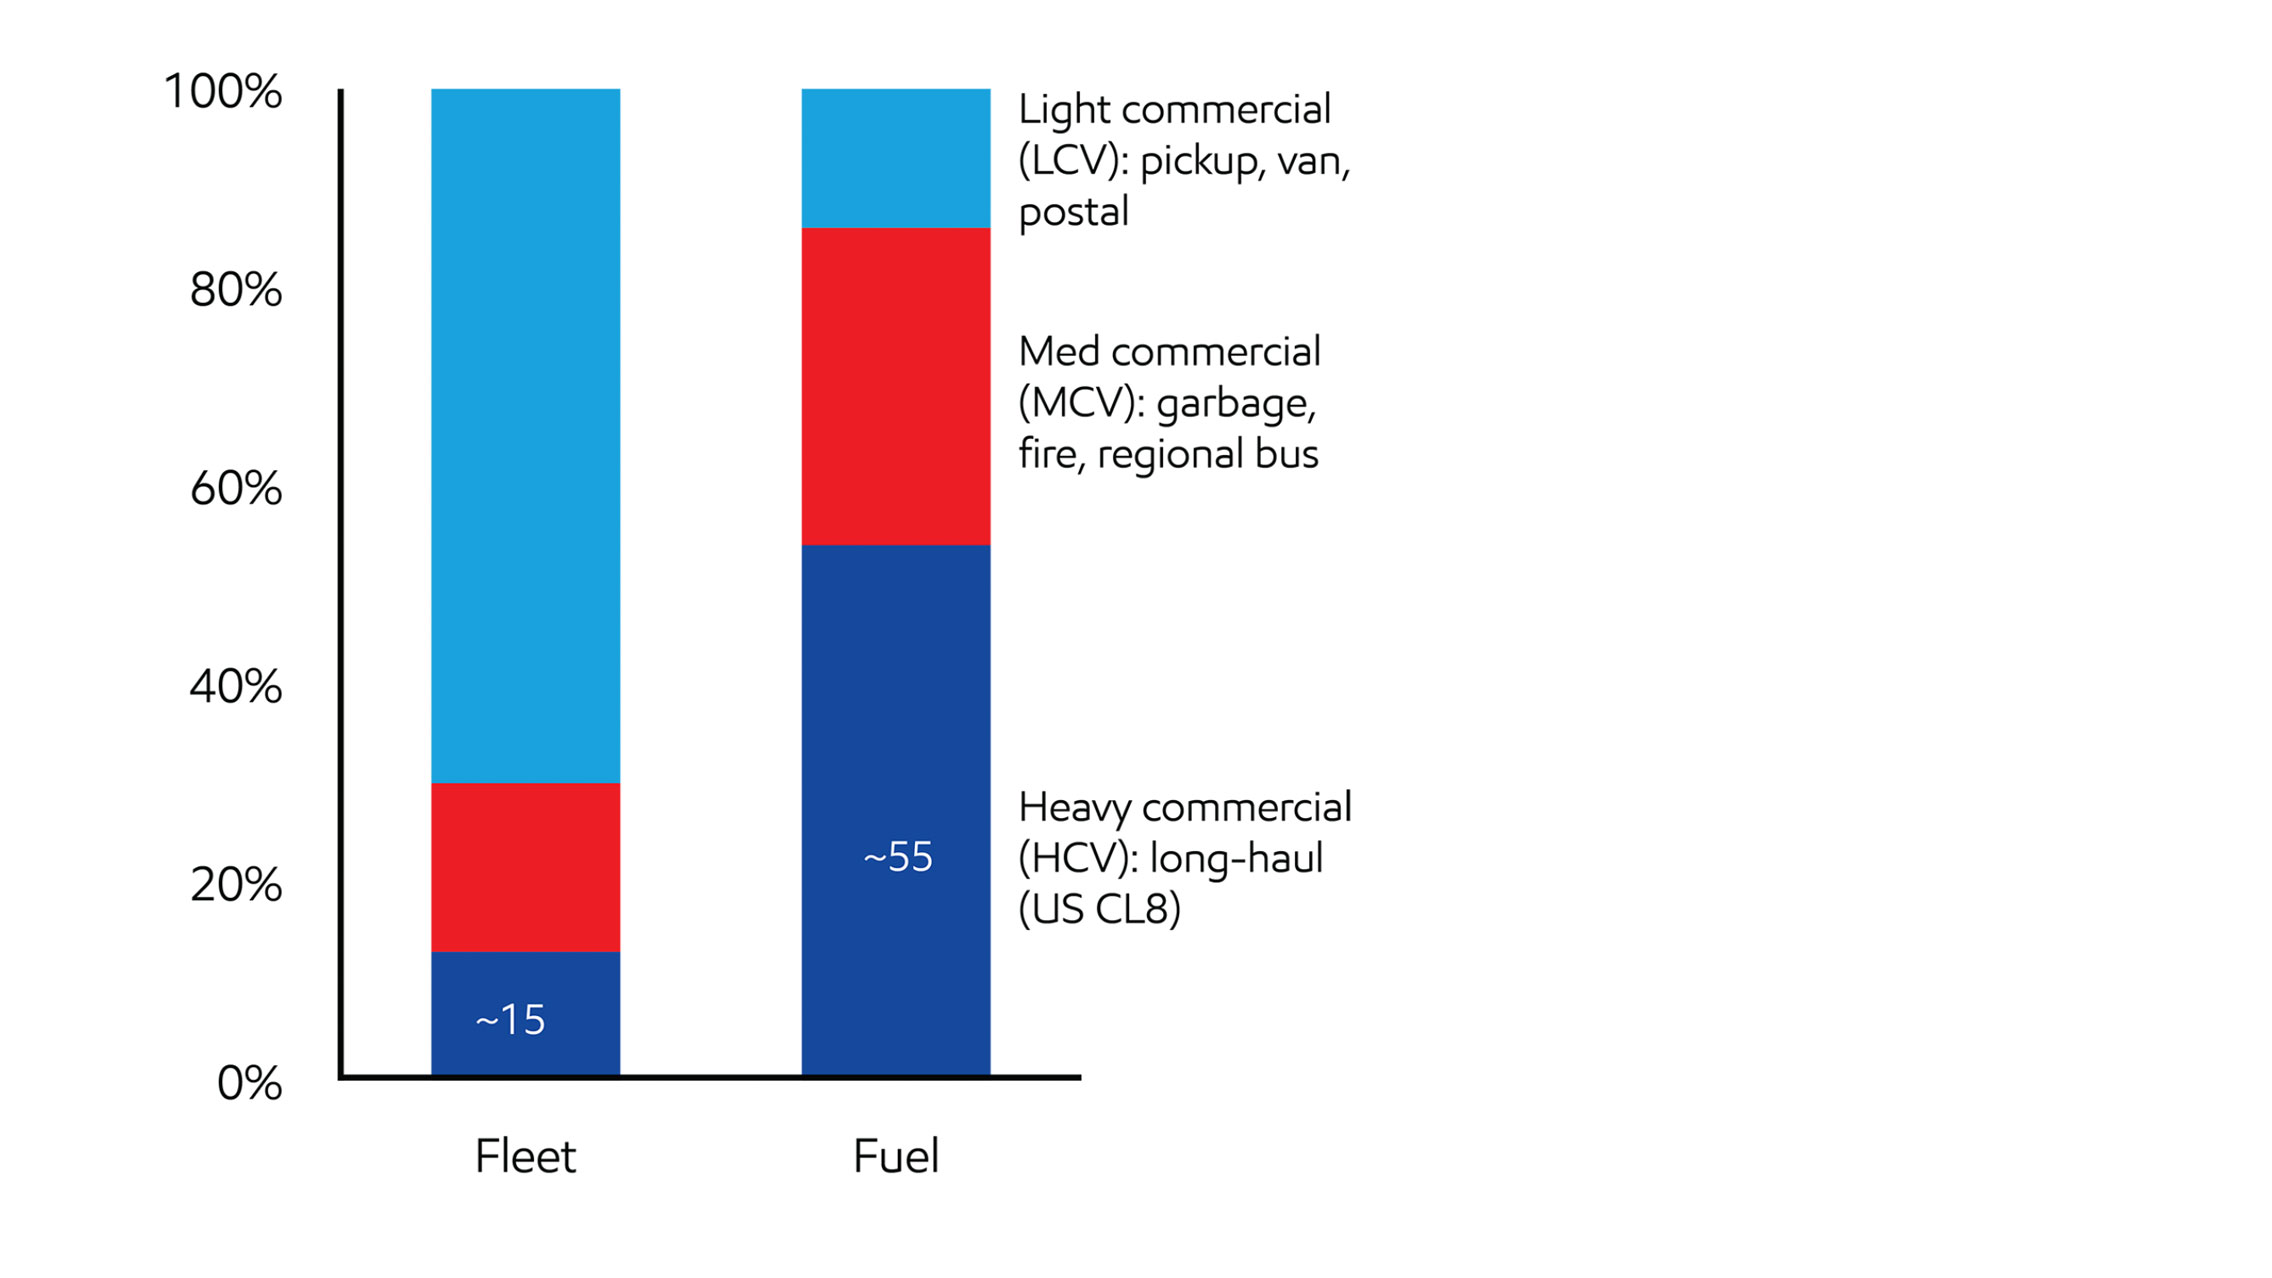 Image 2015 Heavy-duty fleet/fuel usage mix